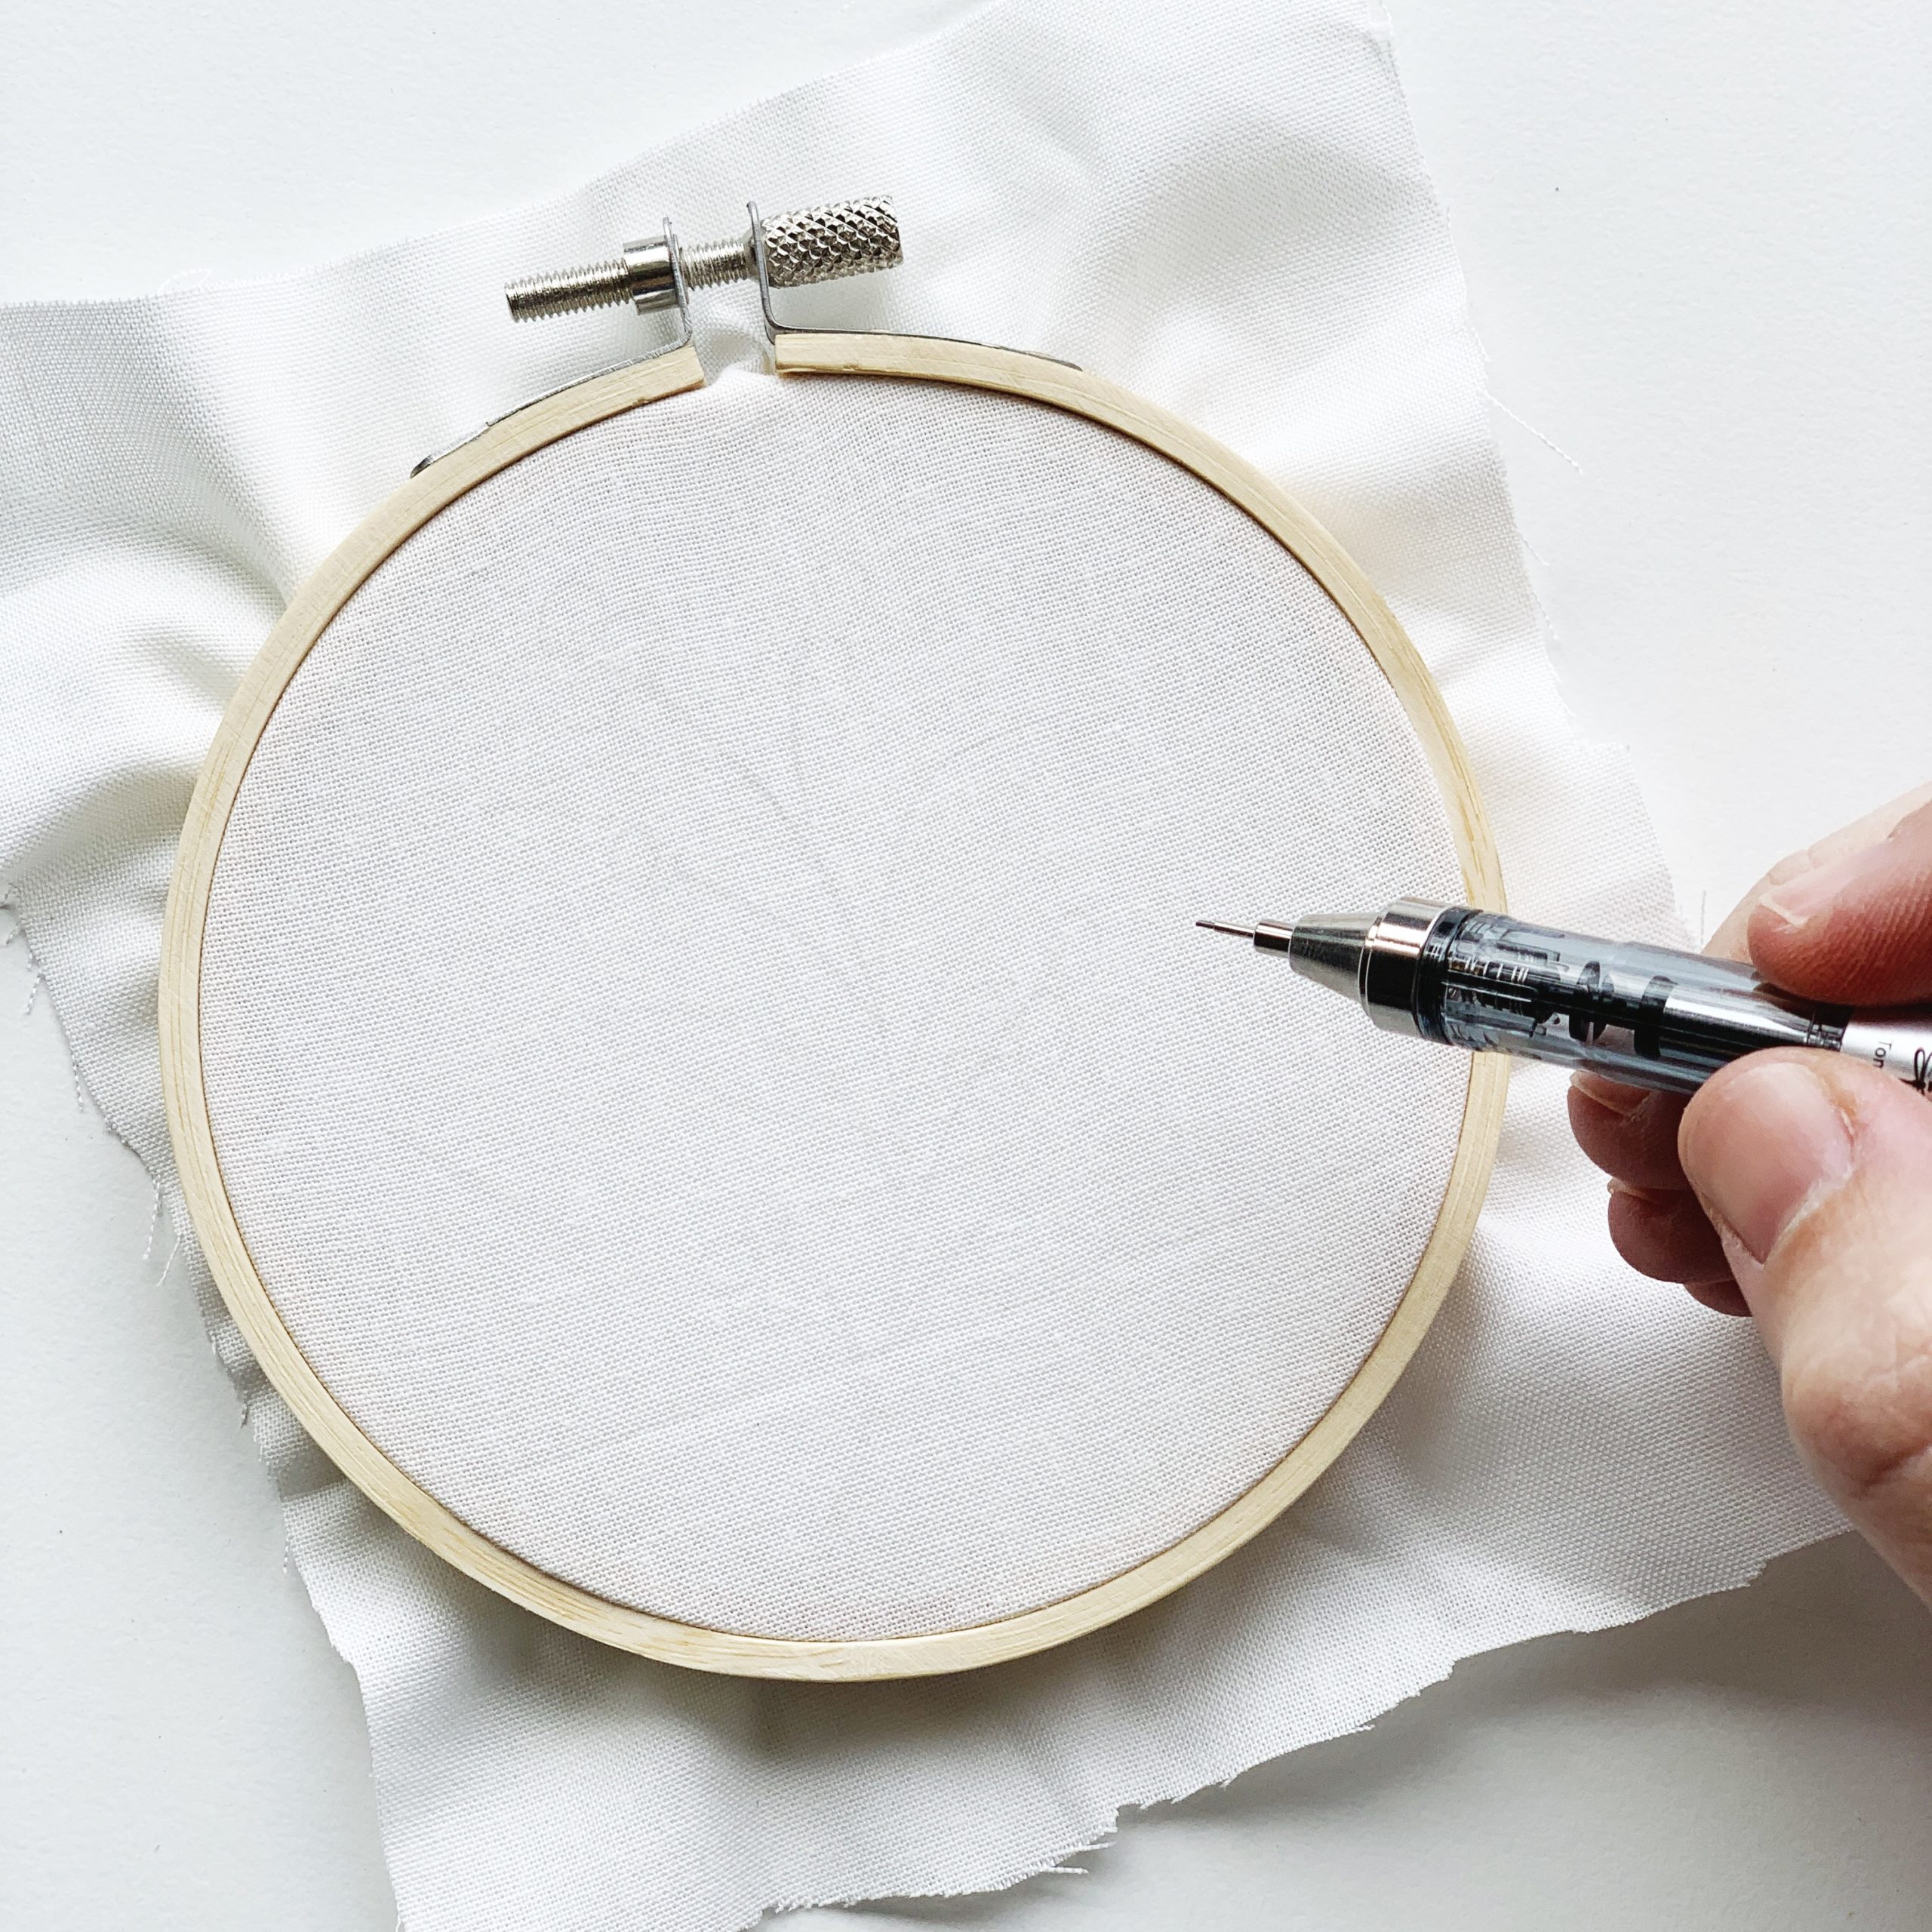 DIY Holiday Embroidery Hoop Gift - Tombow USA Blog